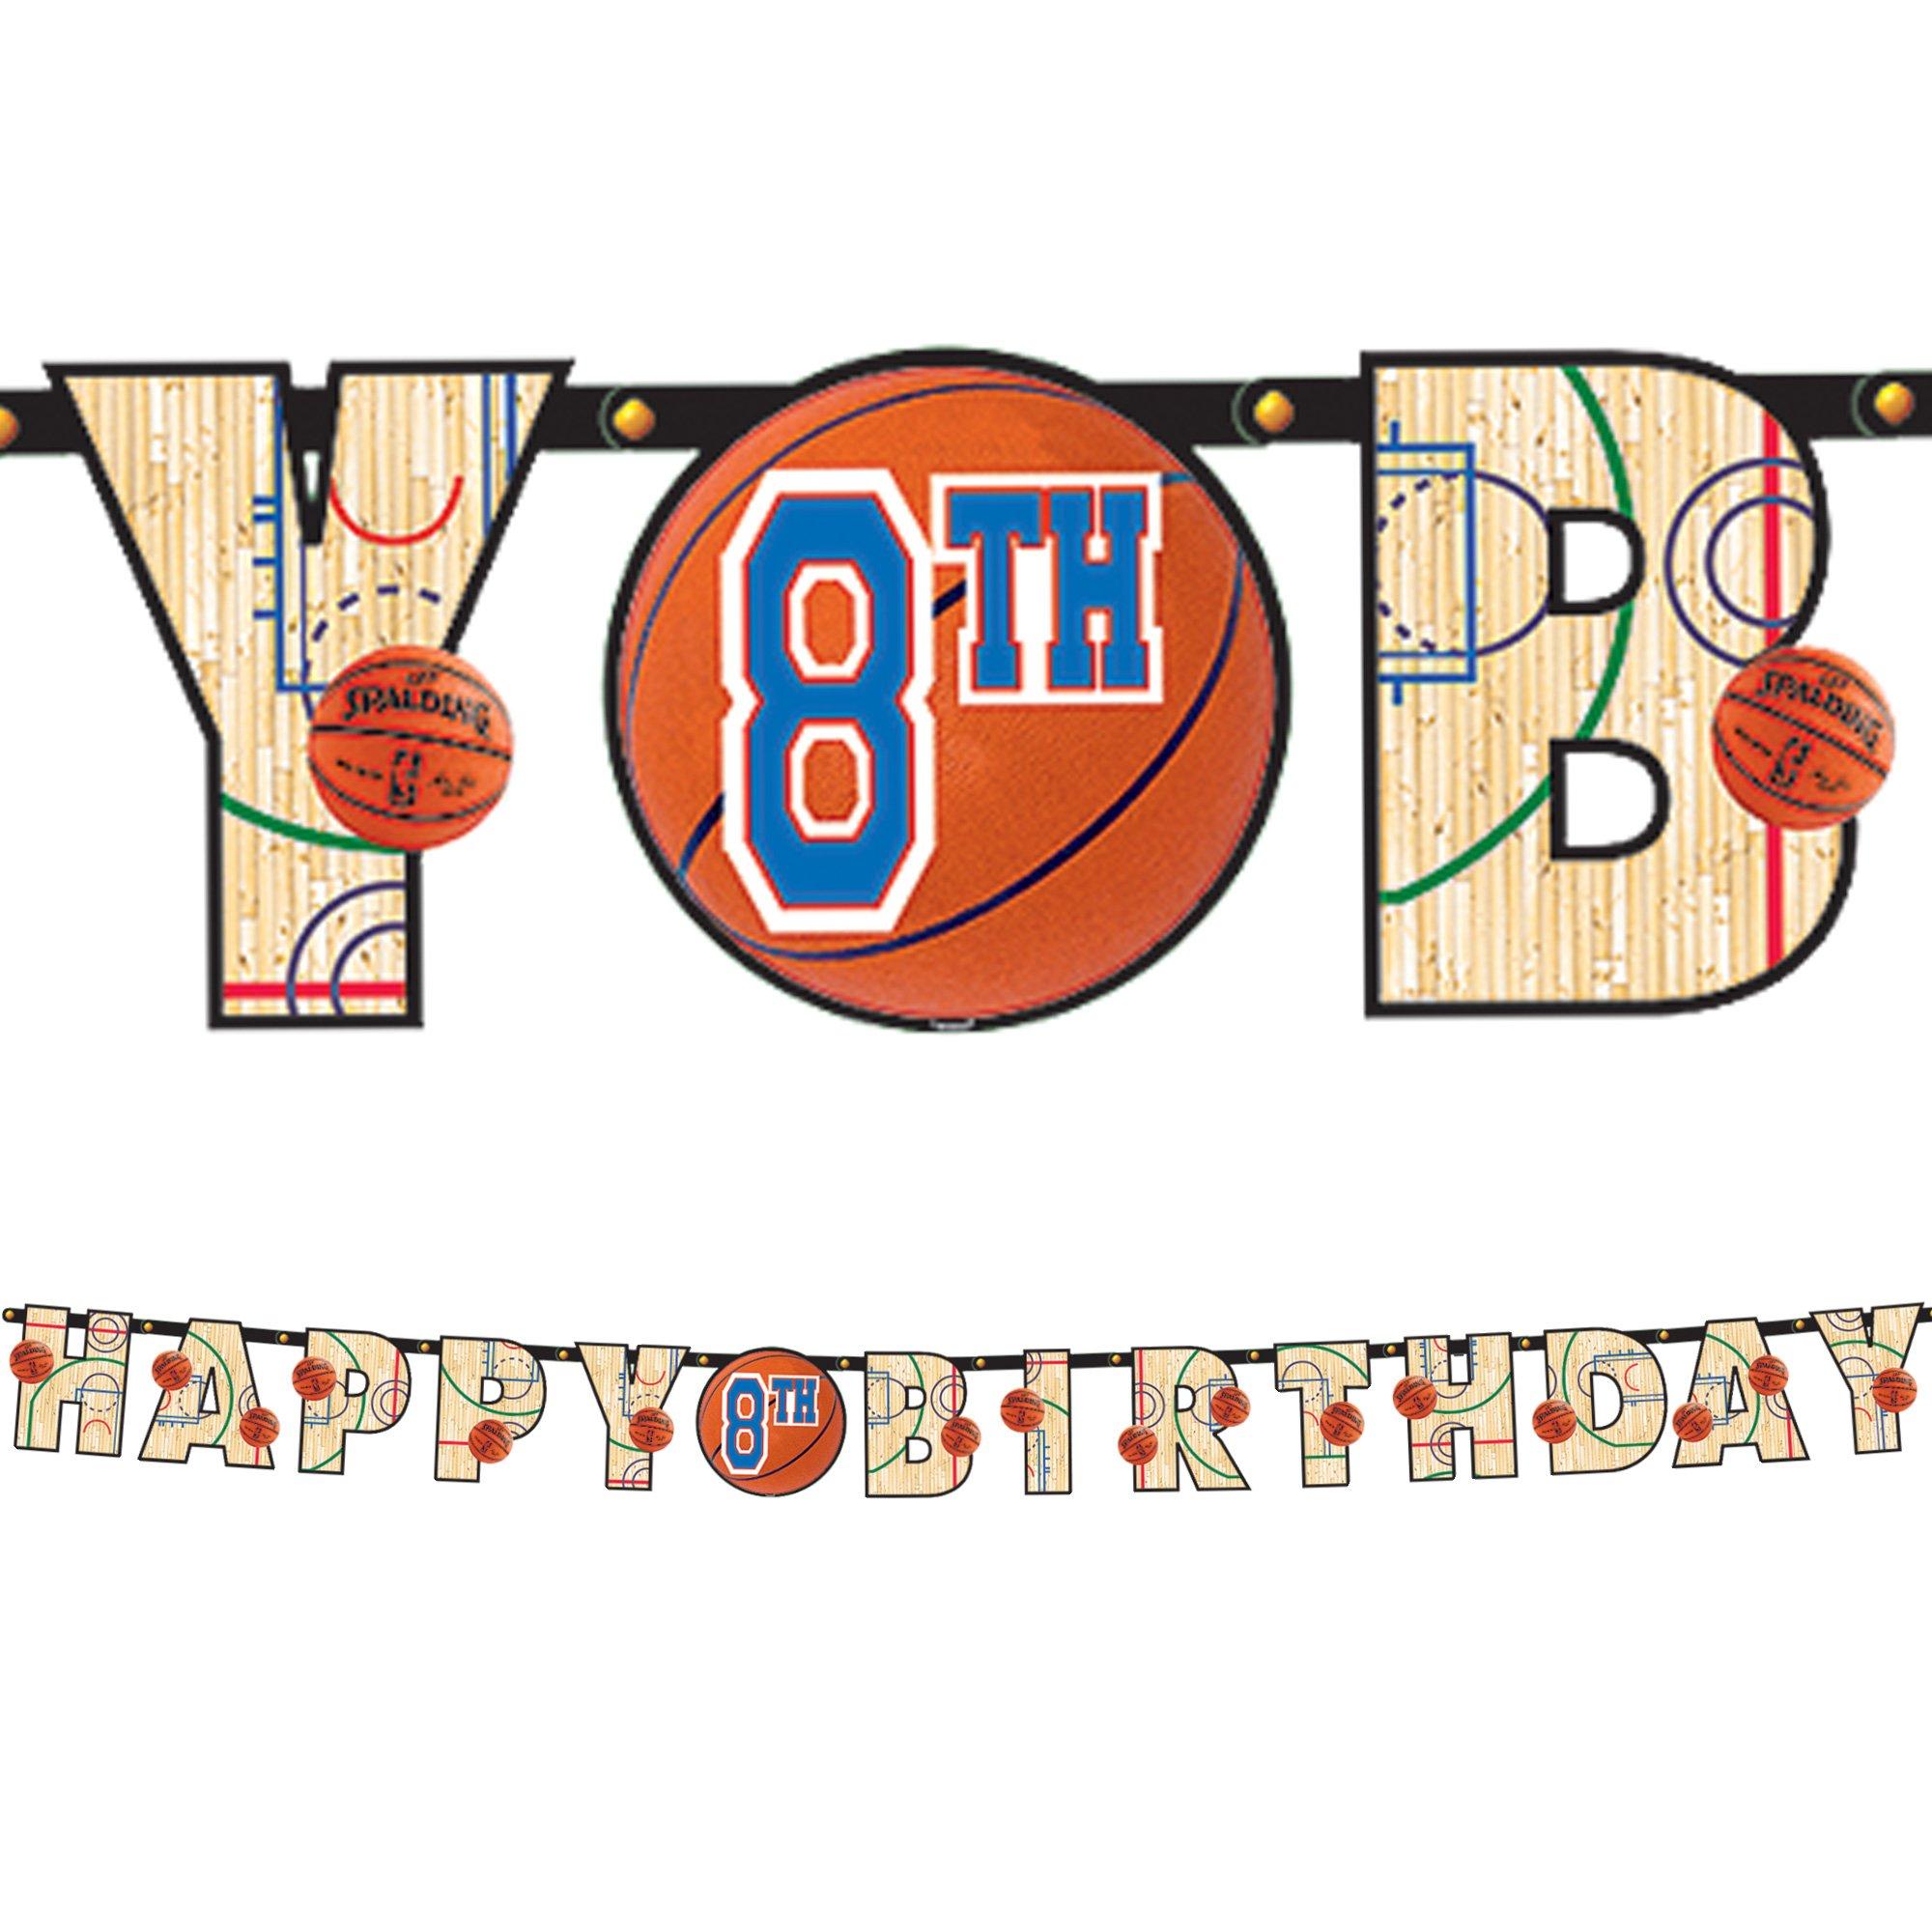 Happy Birthday, Horace - Slice&Dice Basketball Portal